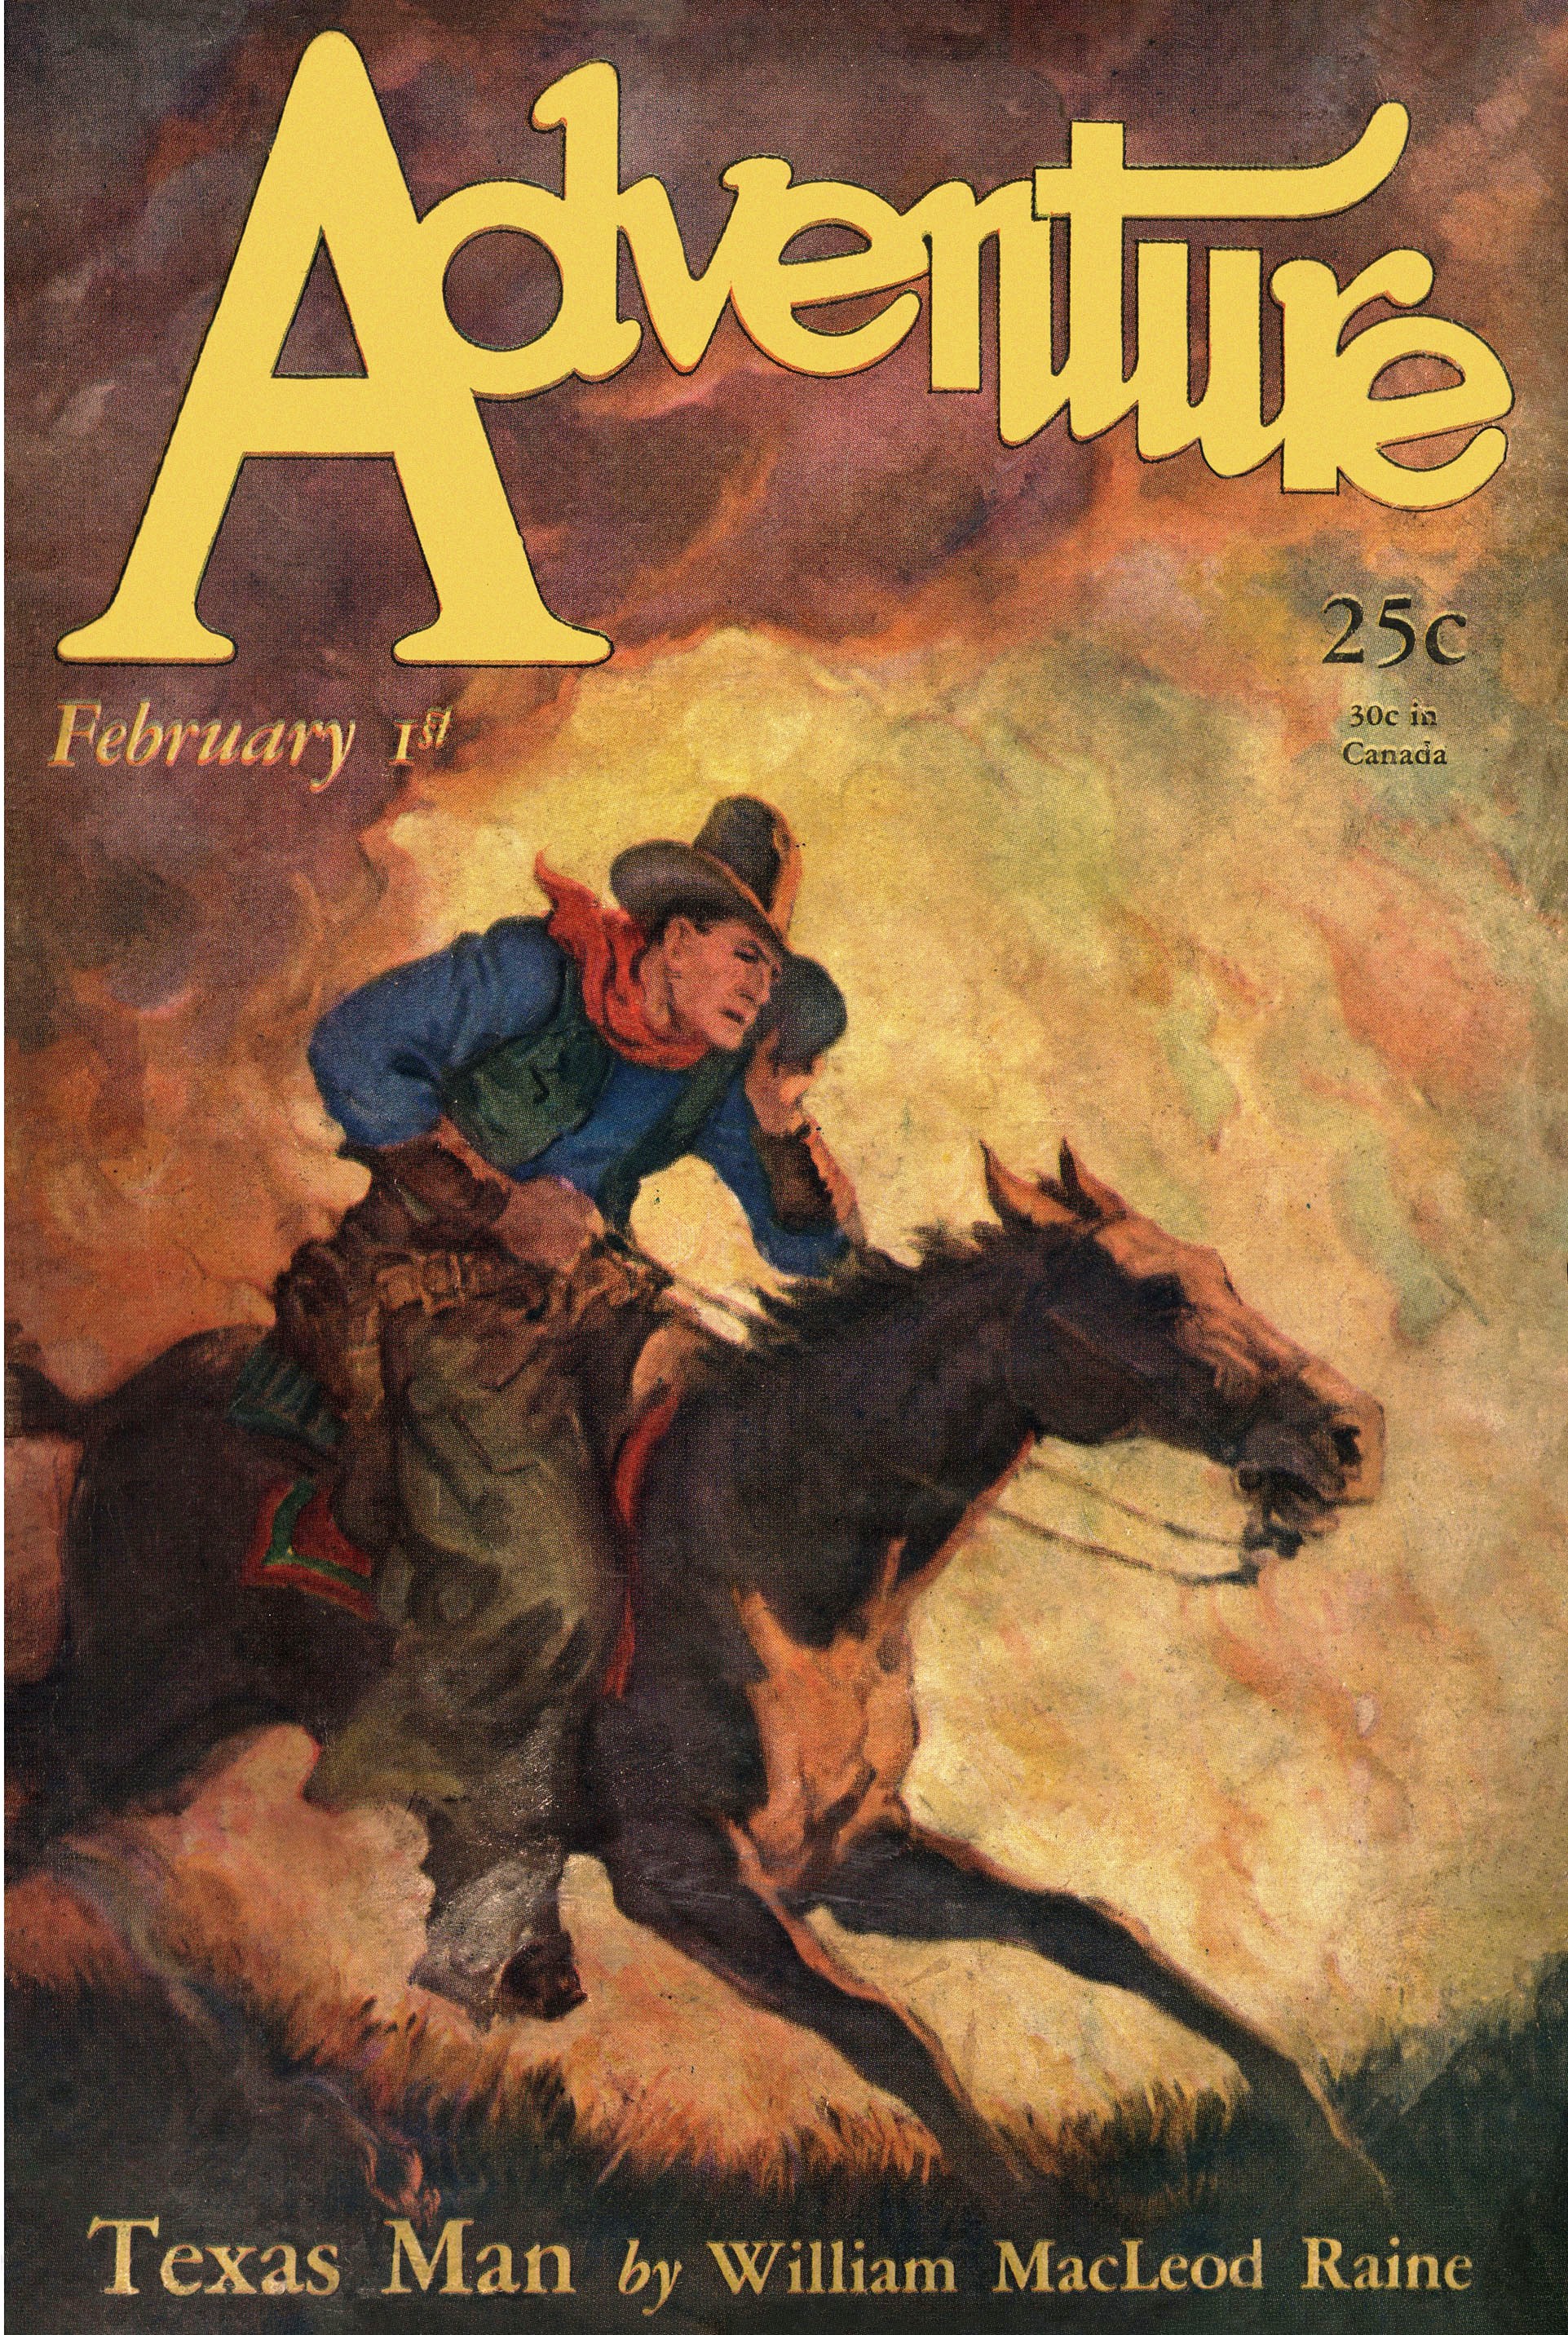 Image - Adventure, February 1, 1928